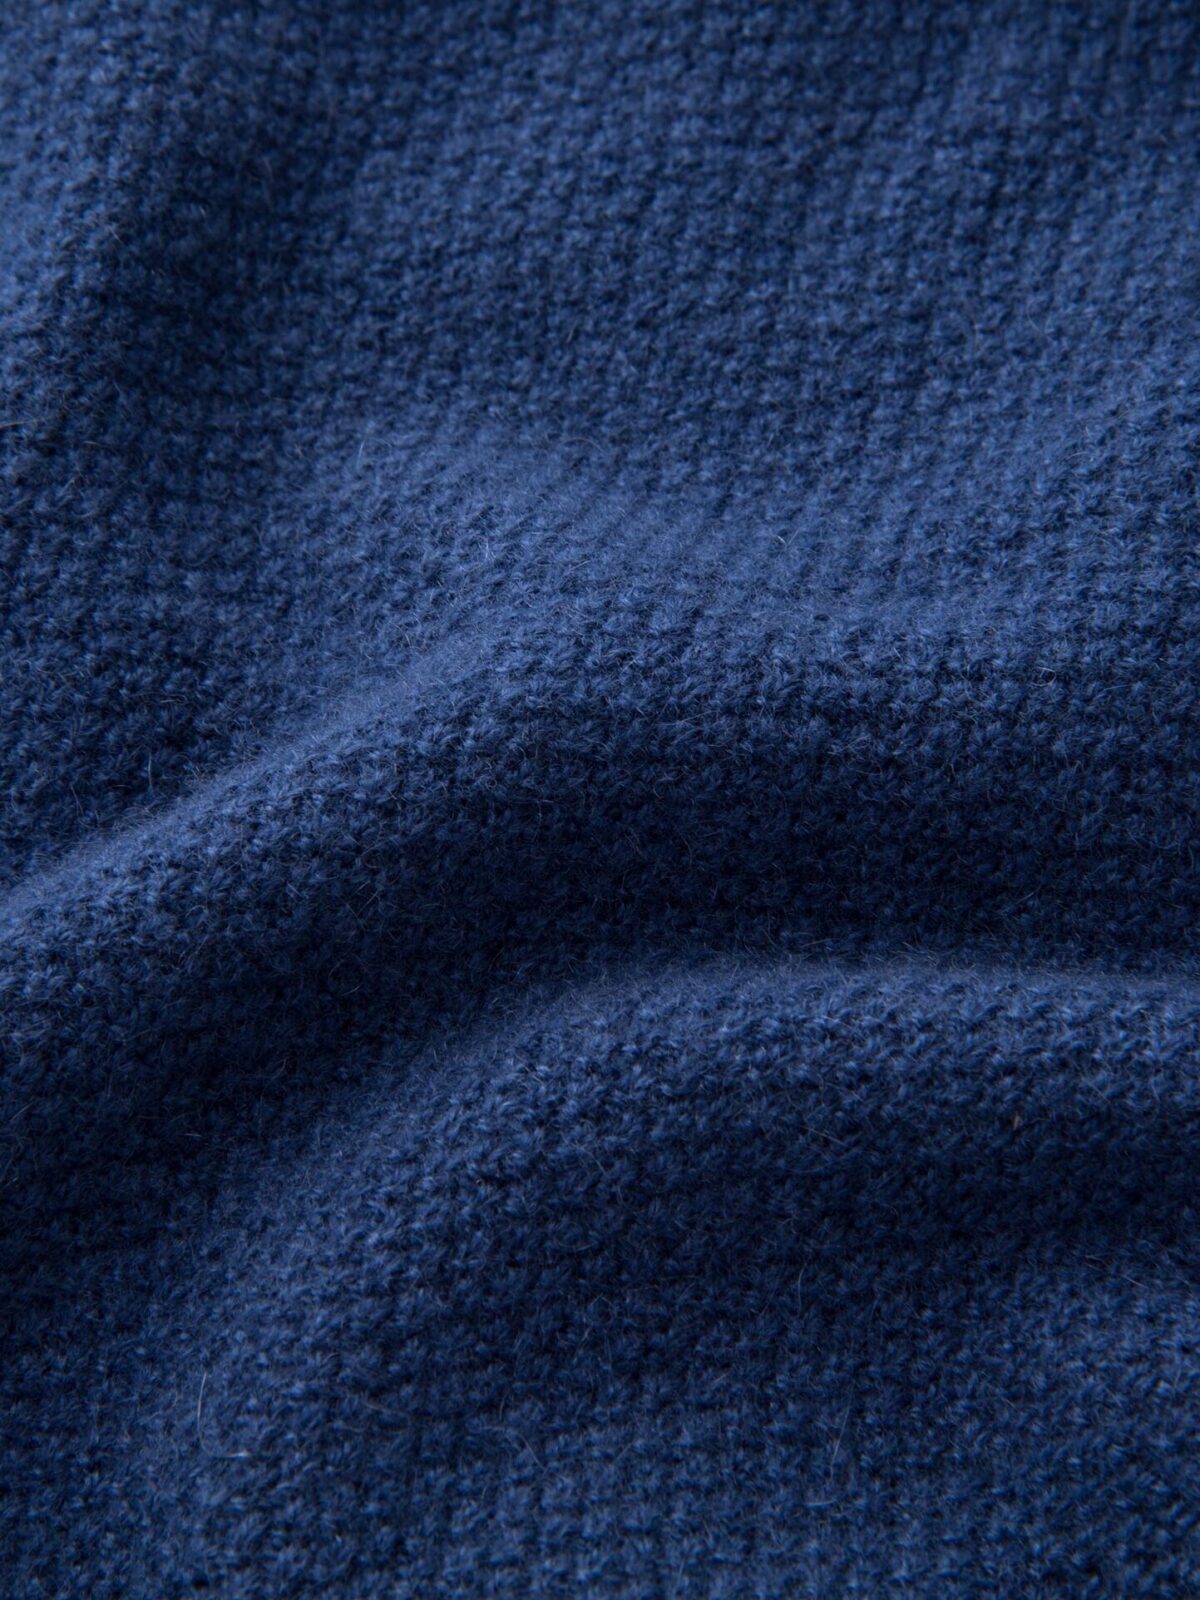 Ocean Blue Cobble Stitch Cashmere Crewneck Sweater